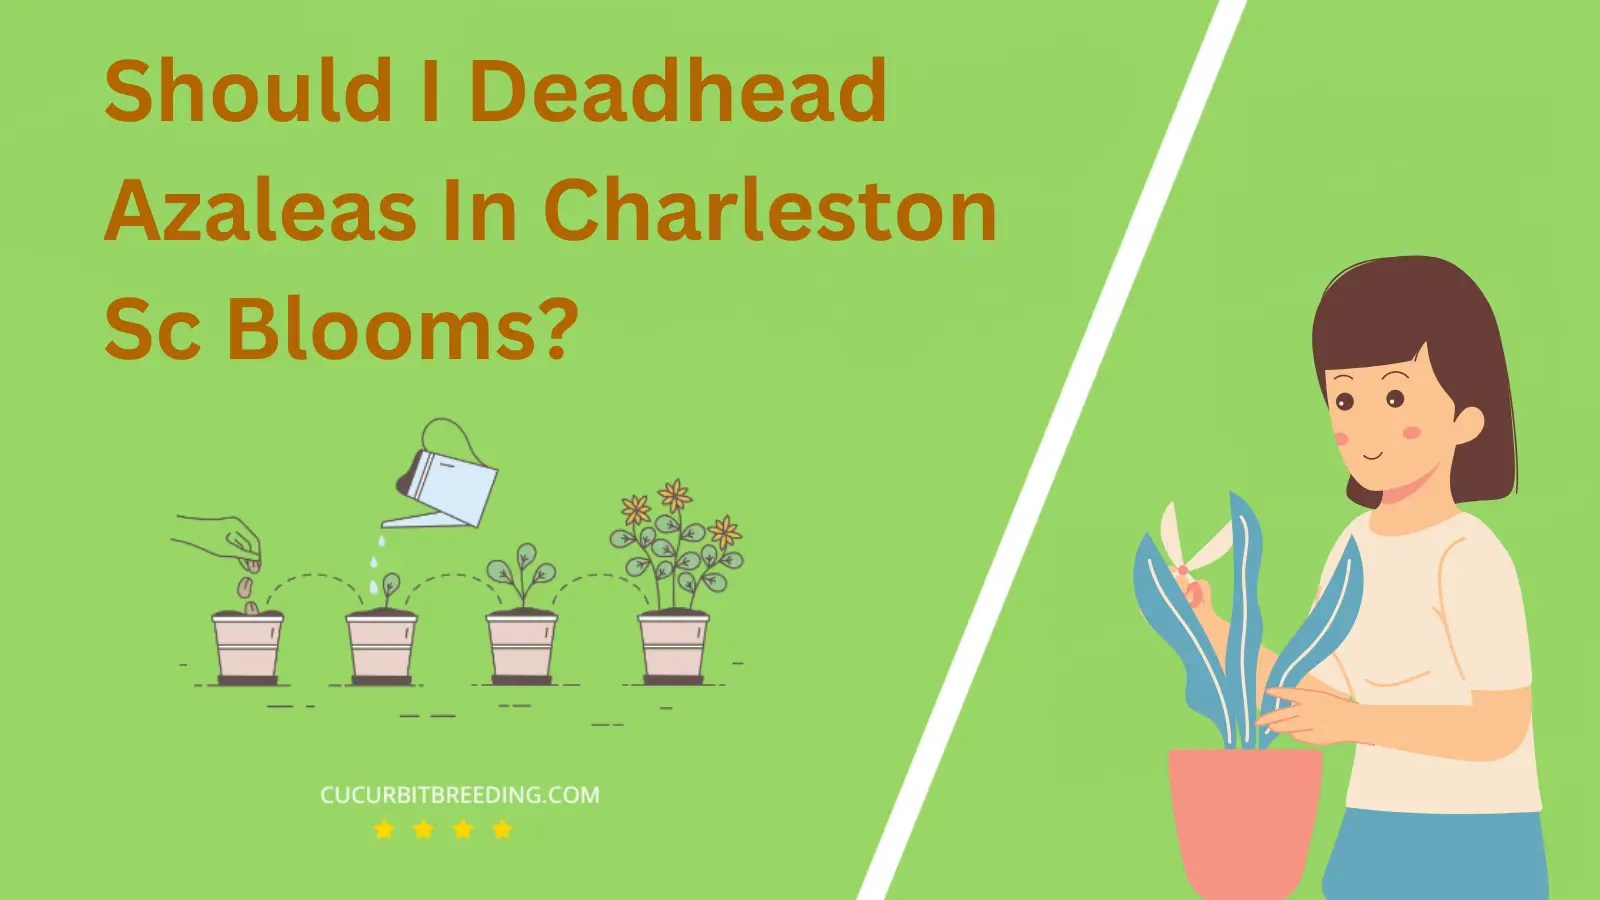 Should I Deadhead Azaleas In Charleston Sc Blooms?